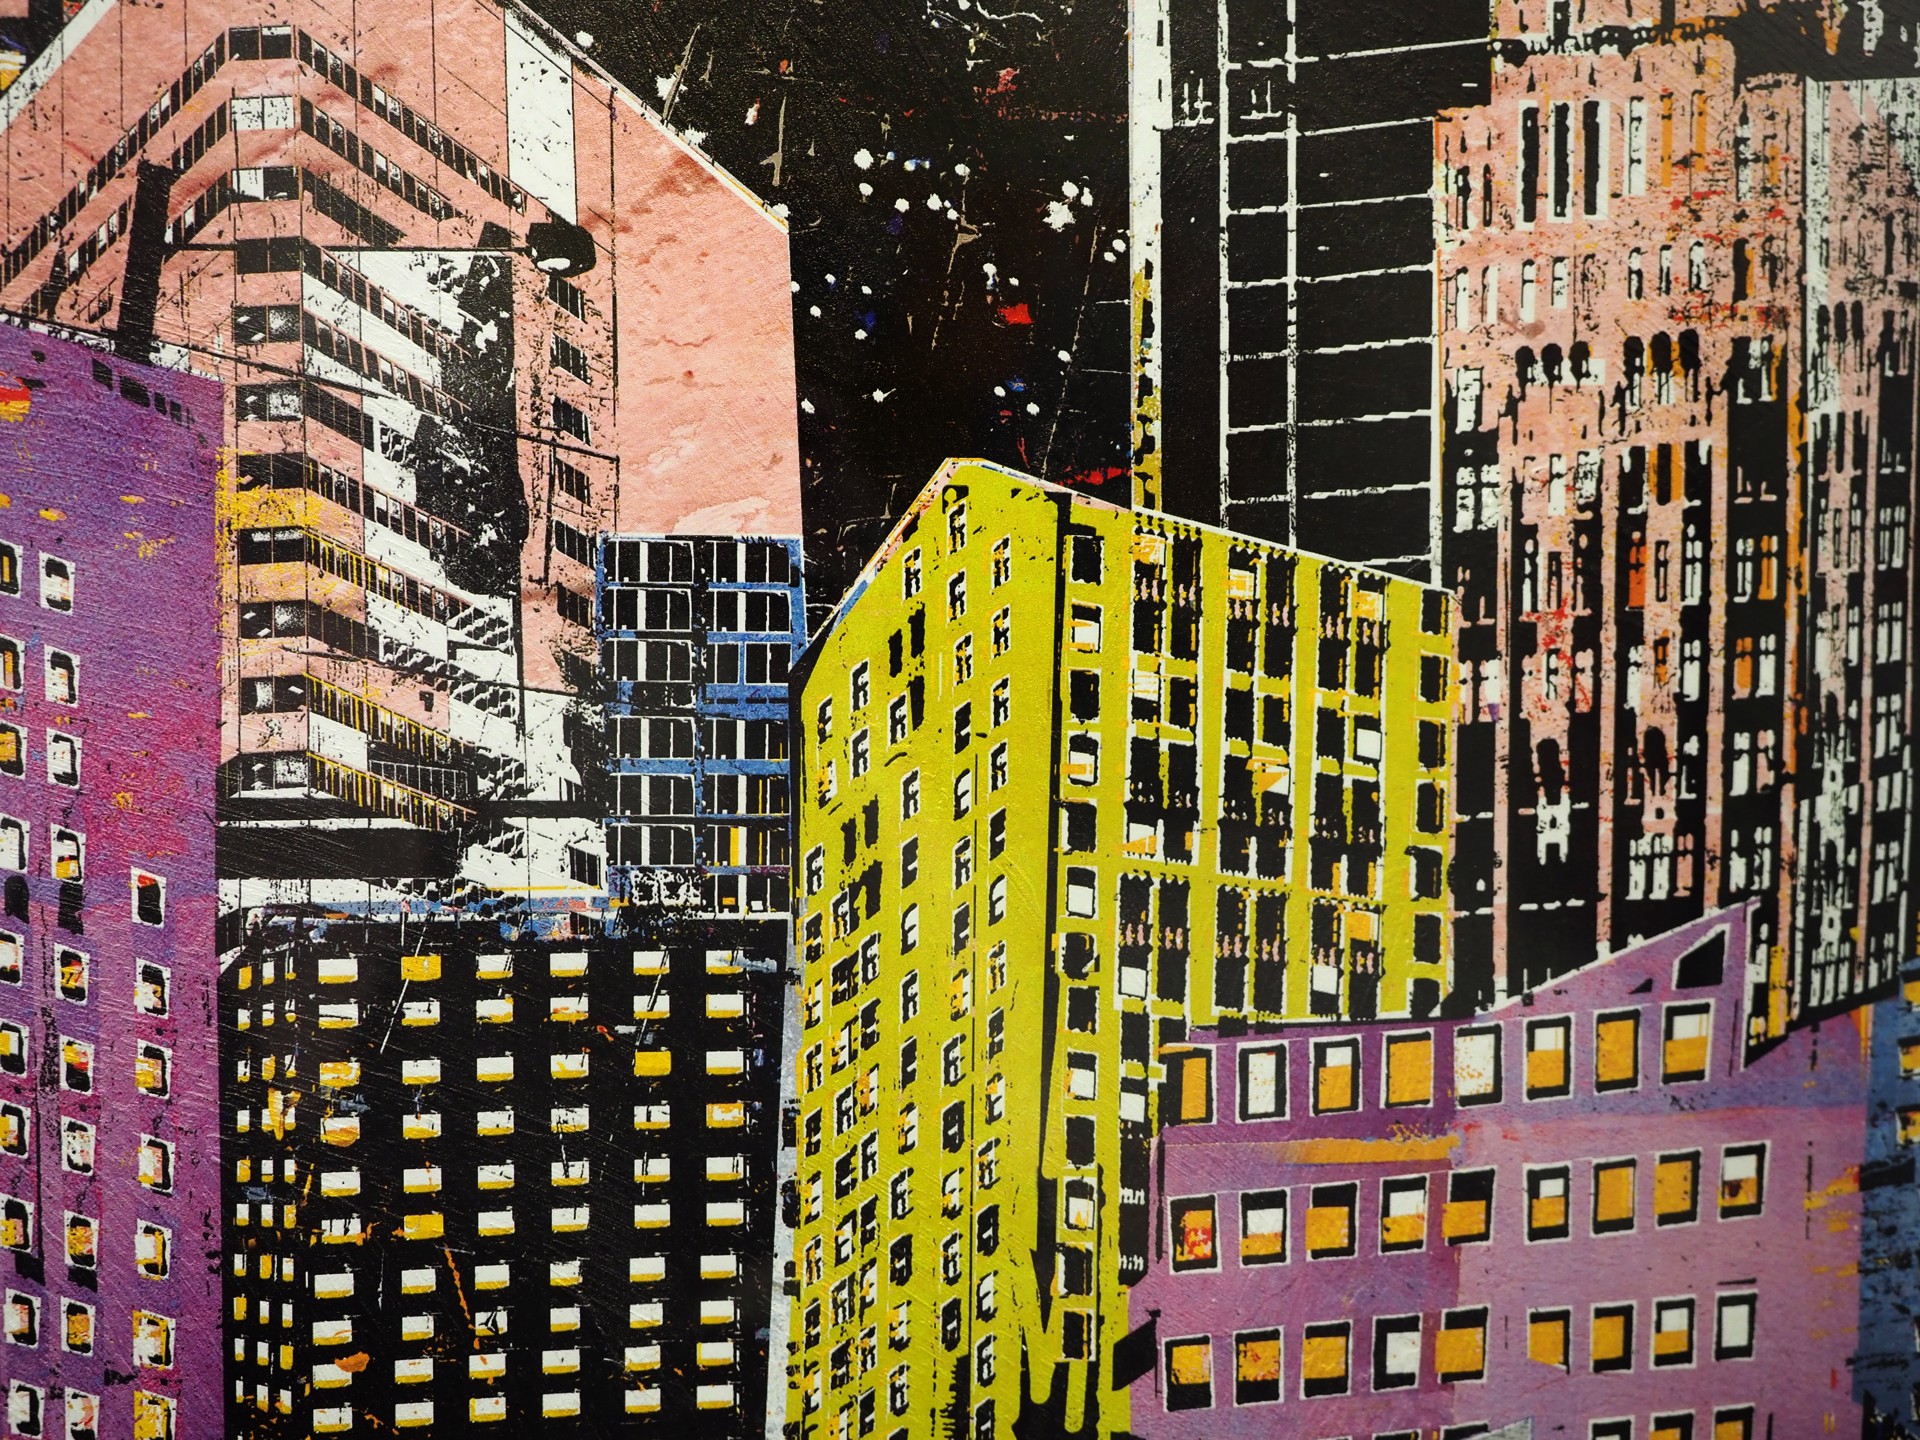 Big City at Night II by Daryl Thetford